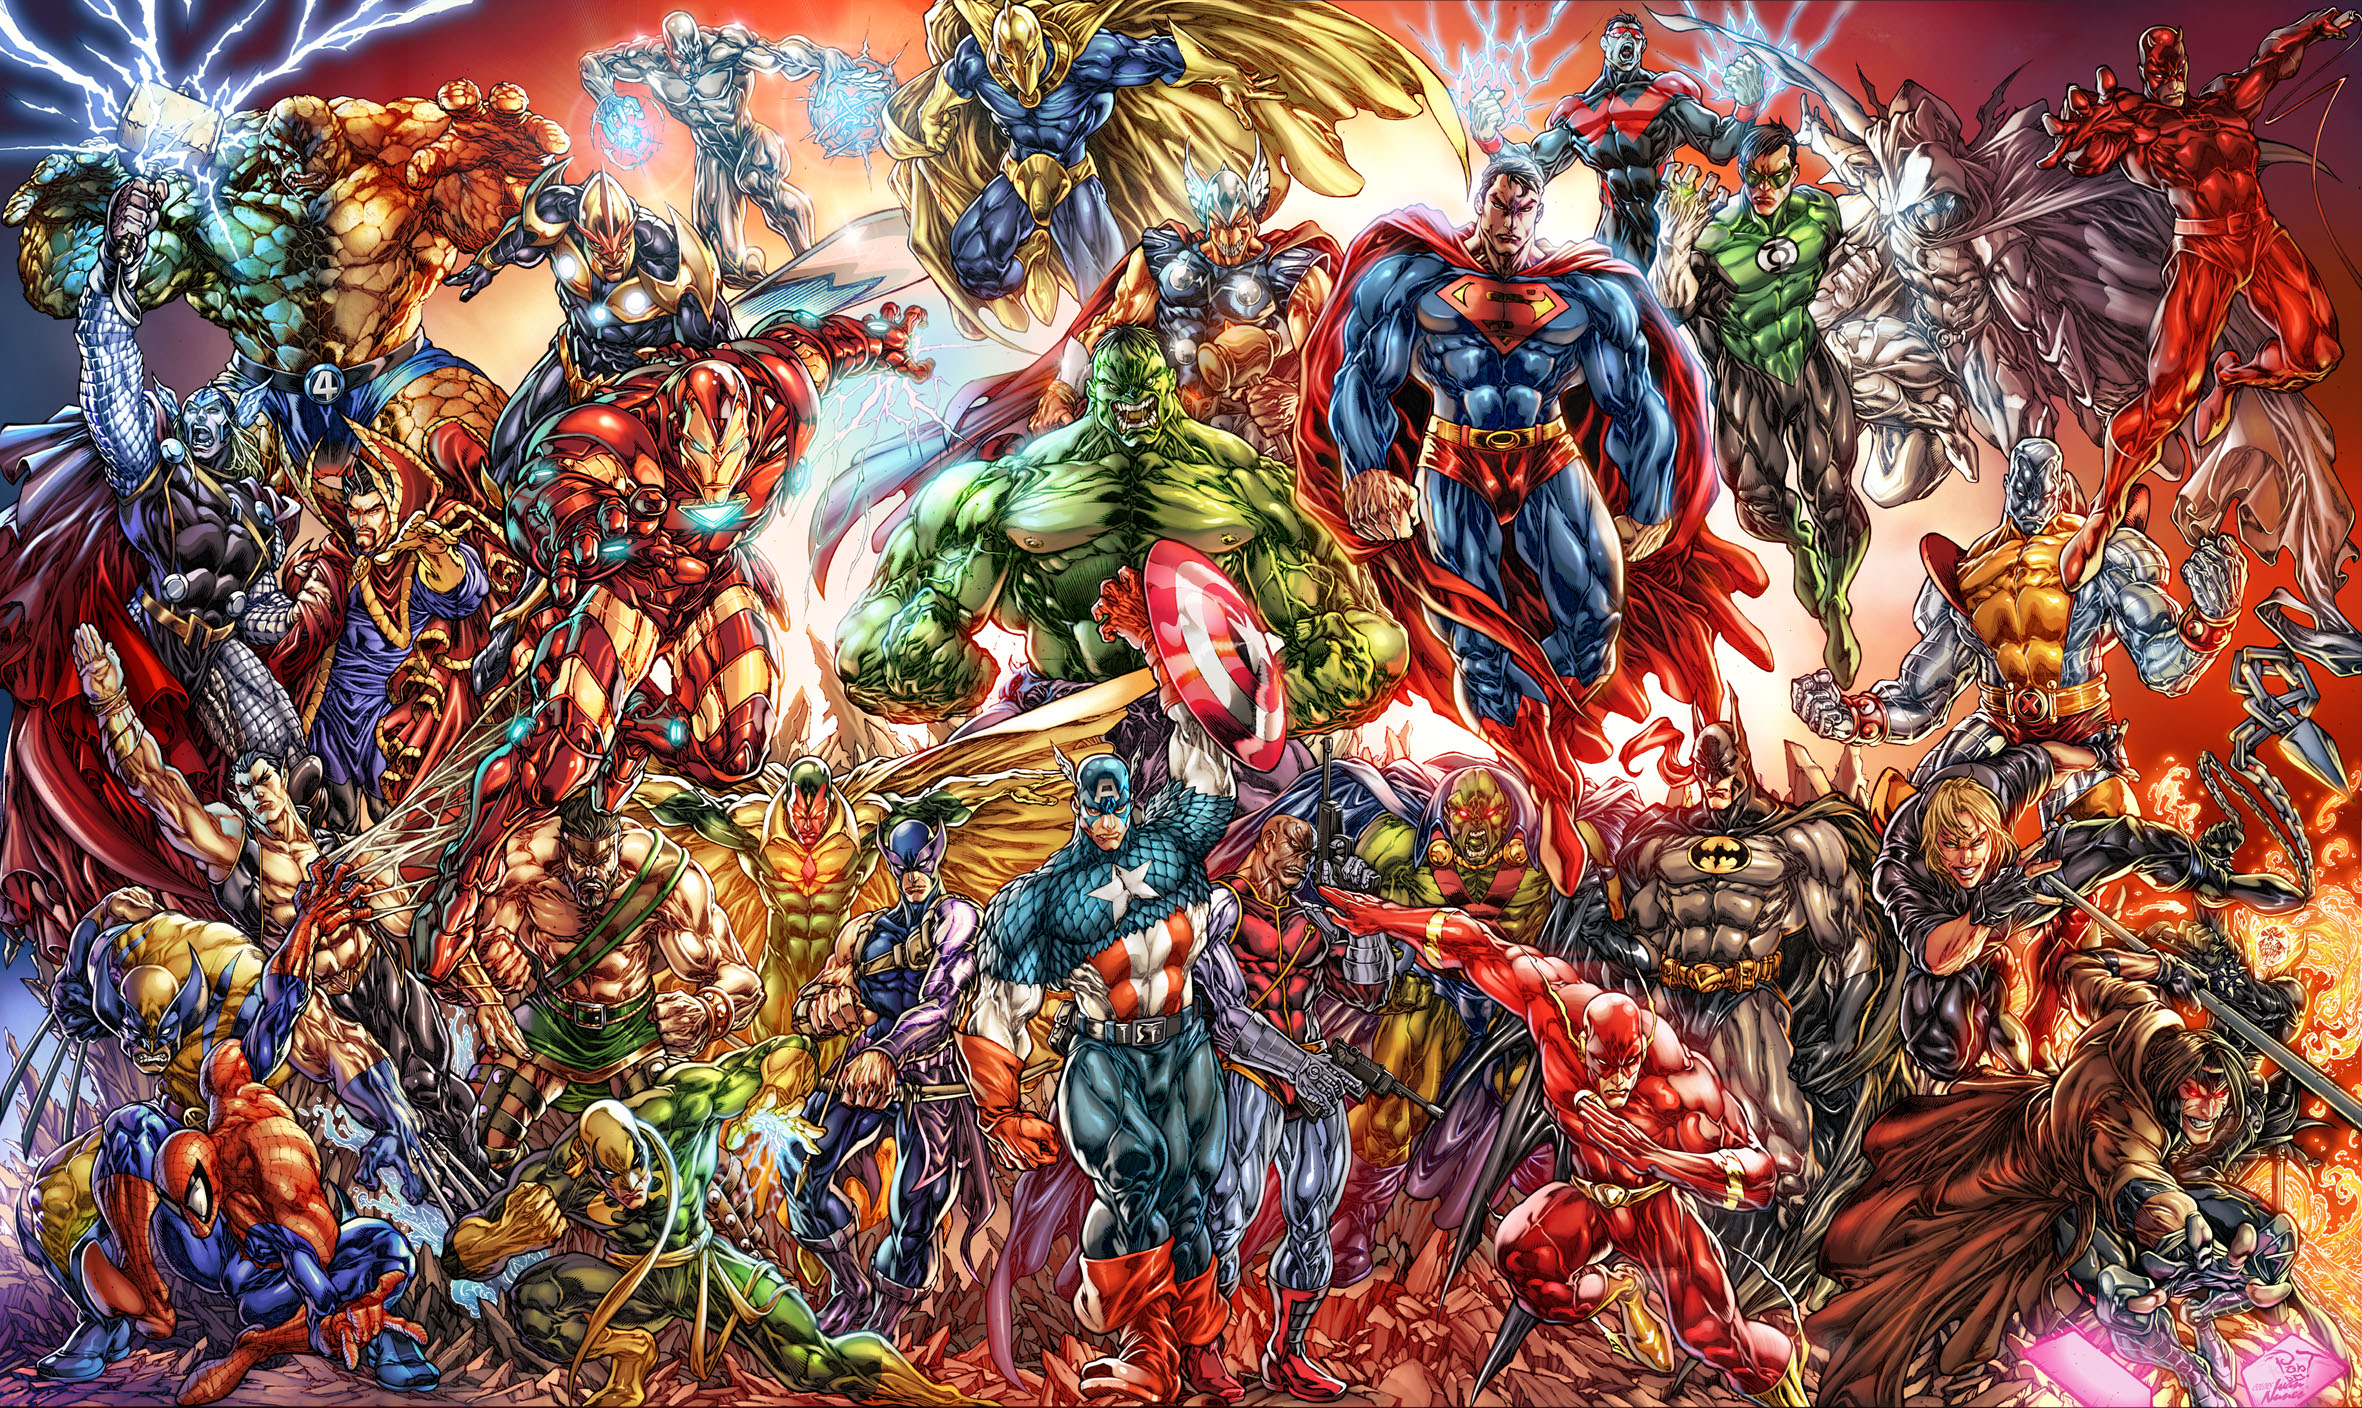 batman, superman, vision (marvel comics), comics, hulk, spider man, collage, dc comics, daredevil, ghost rider, iron man, thor, hal jordan, martian manhunter, barry allen, wolverine, ben grimm, beta ray bill, captain america, clint barton, colossus, danny rand, deathlok, doctor fate (dc comics), doctor strange, flash, gambit (marvel comics), green lantern, hawkeye, hercules (marvel comics), iron fist (marvel comics), j'onn j'onzz, longshot (marvel comics), moon knight, namor the sub mariner, nightwing, nova (marvel comics), peter parker, silver surfer, sub mariner, thing (marvel comics), wonder man phone background